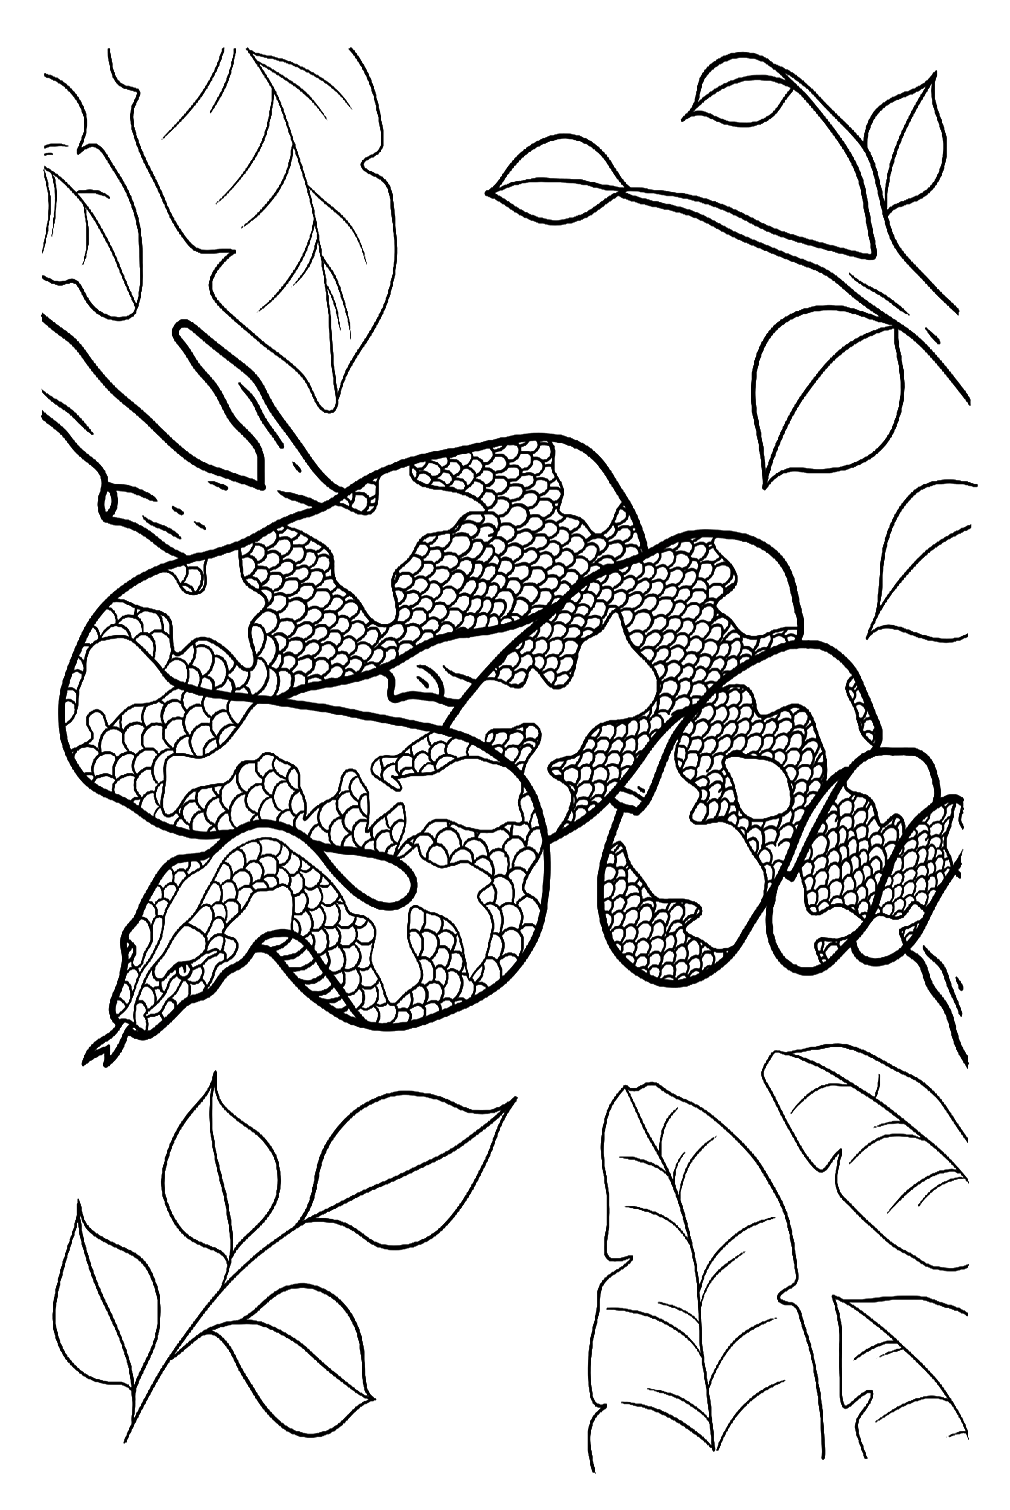 Grote Python-kleurplaat van Python